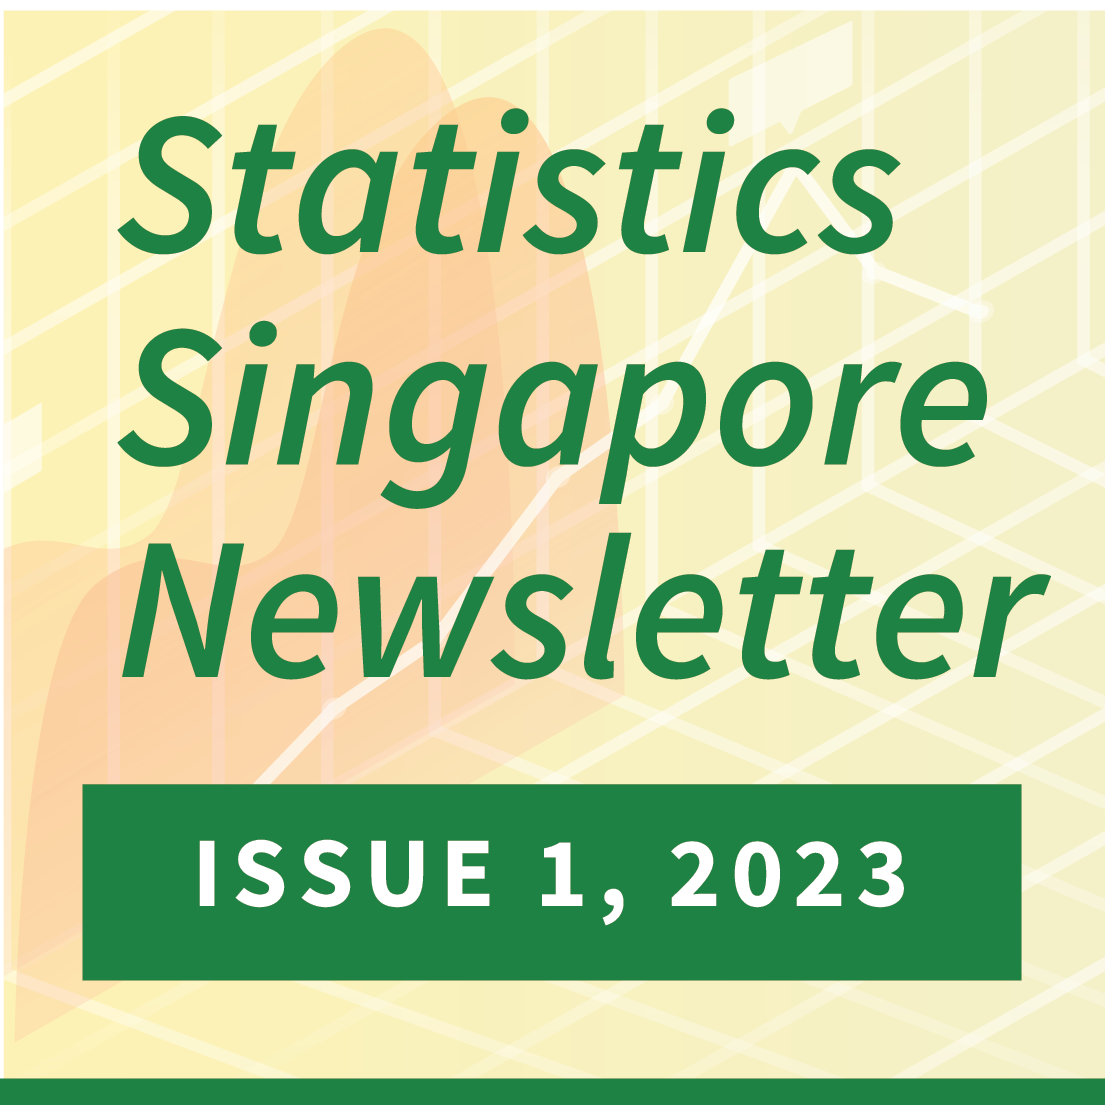 Statistics Singapore Newsletter, Issue 1, 2023